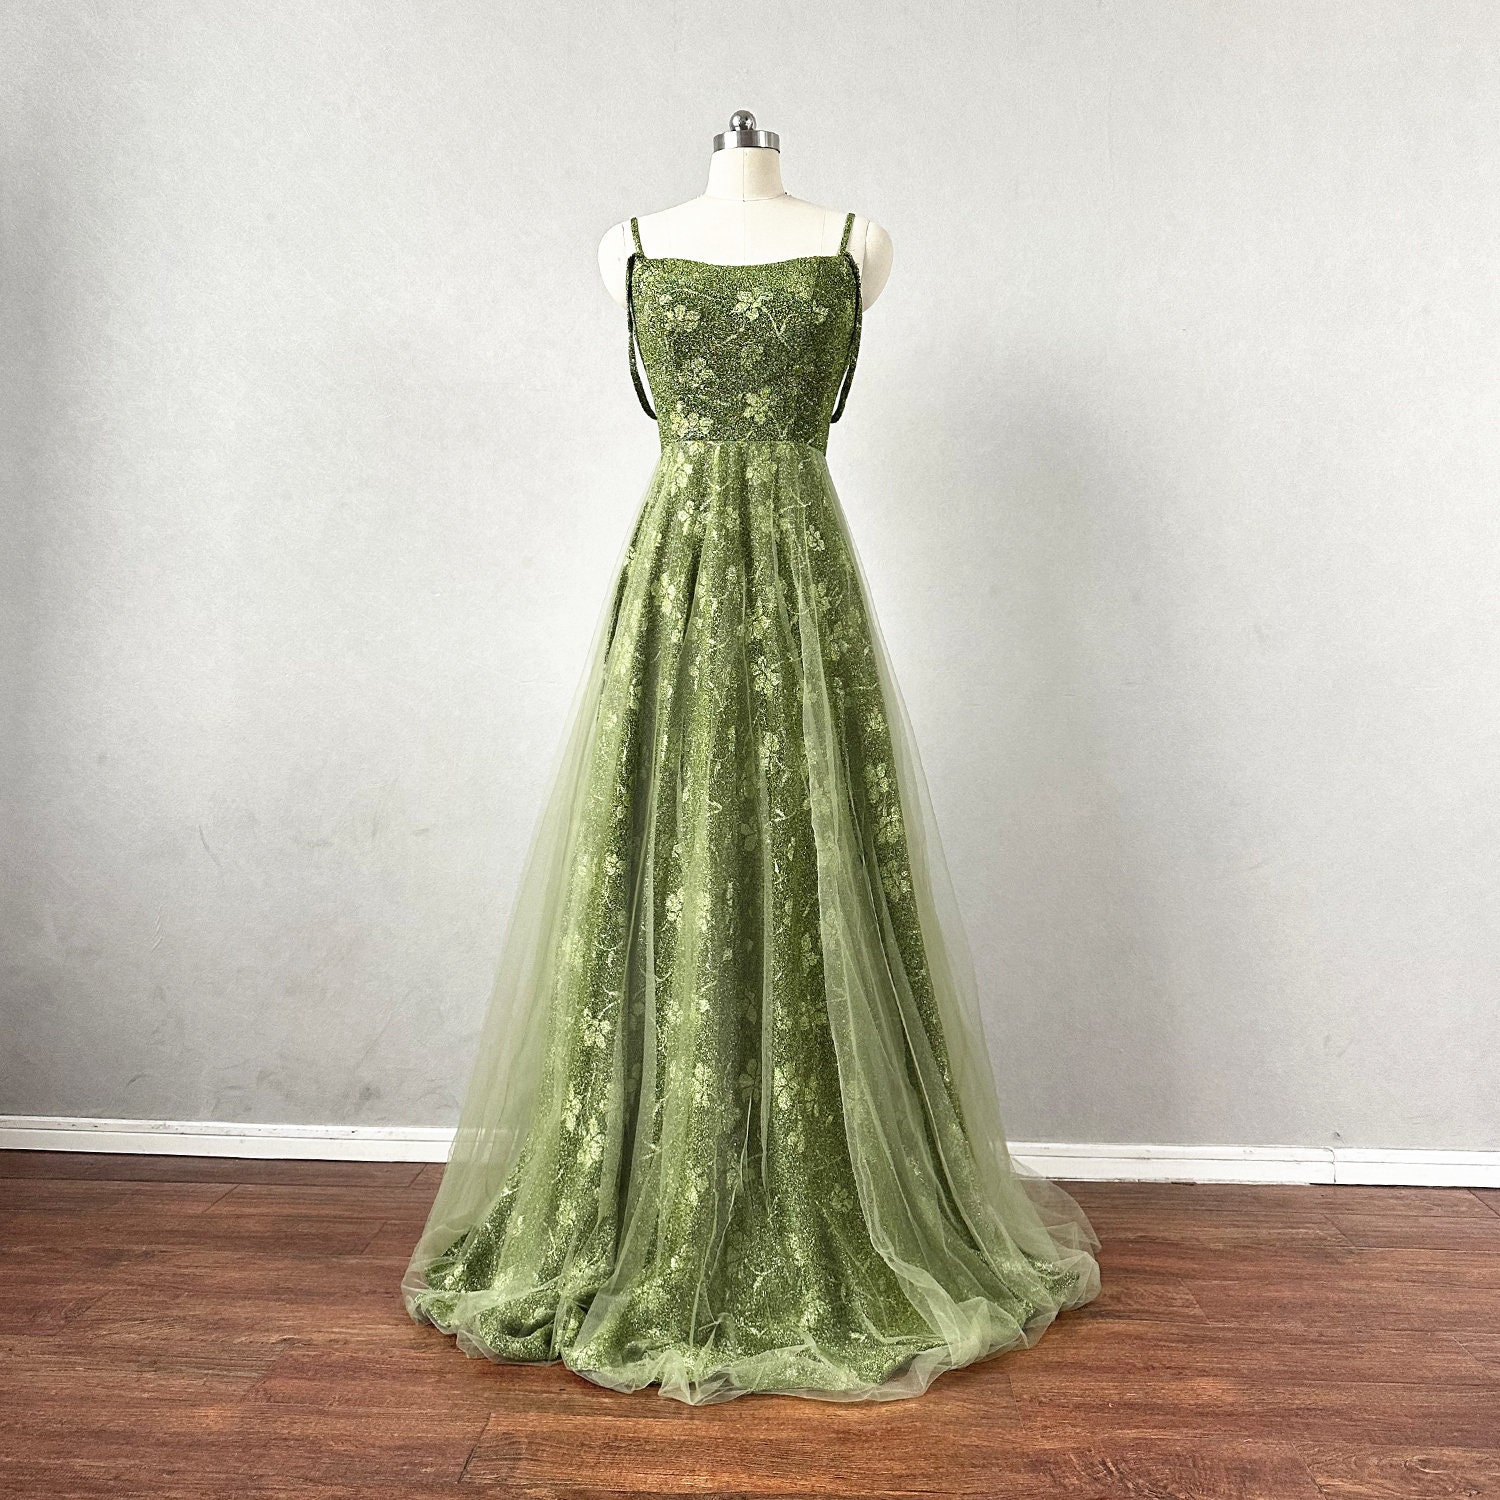 Moss Green Floral Prom Dress Corset Back Tulle Overlay Skirt - Etsy